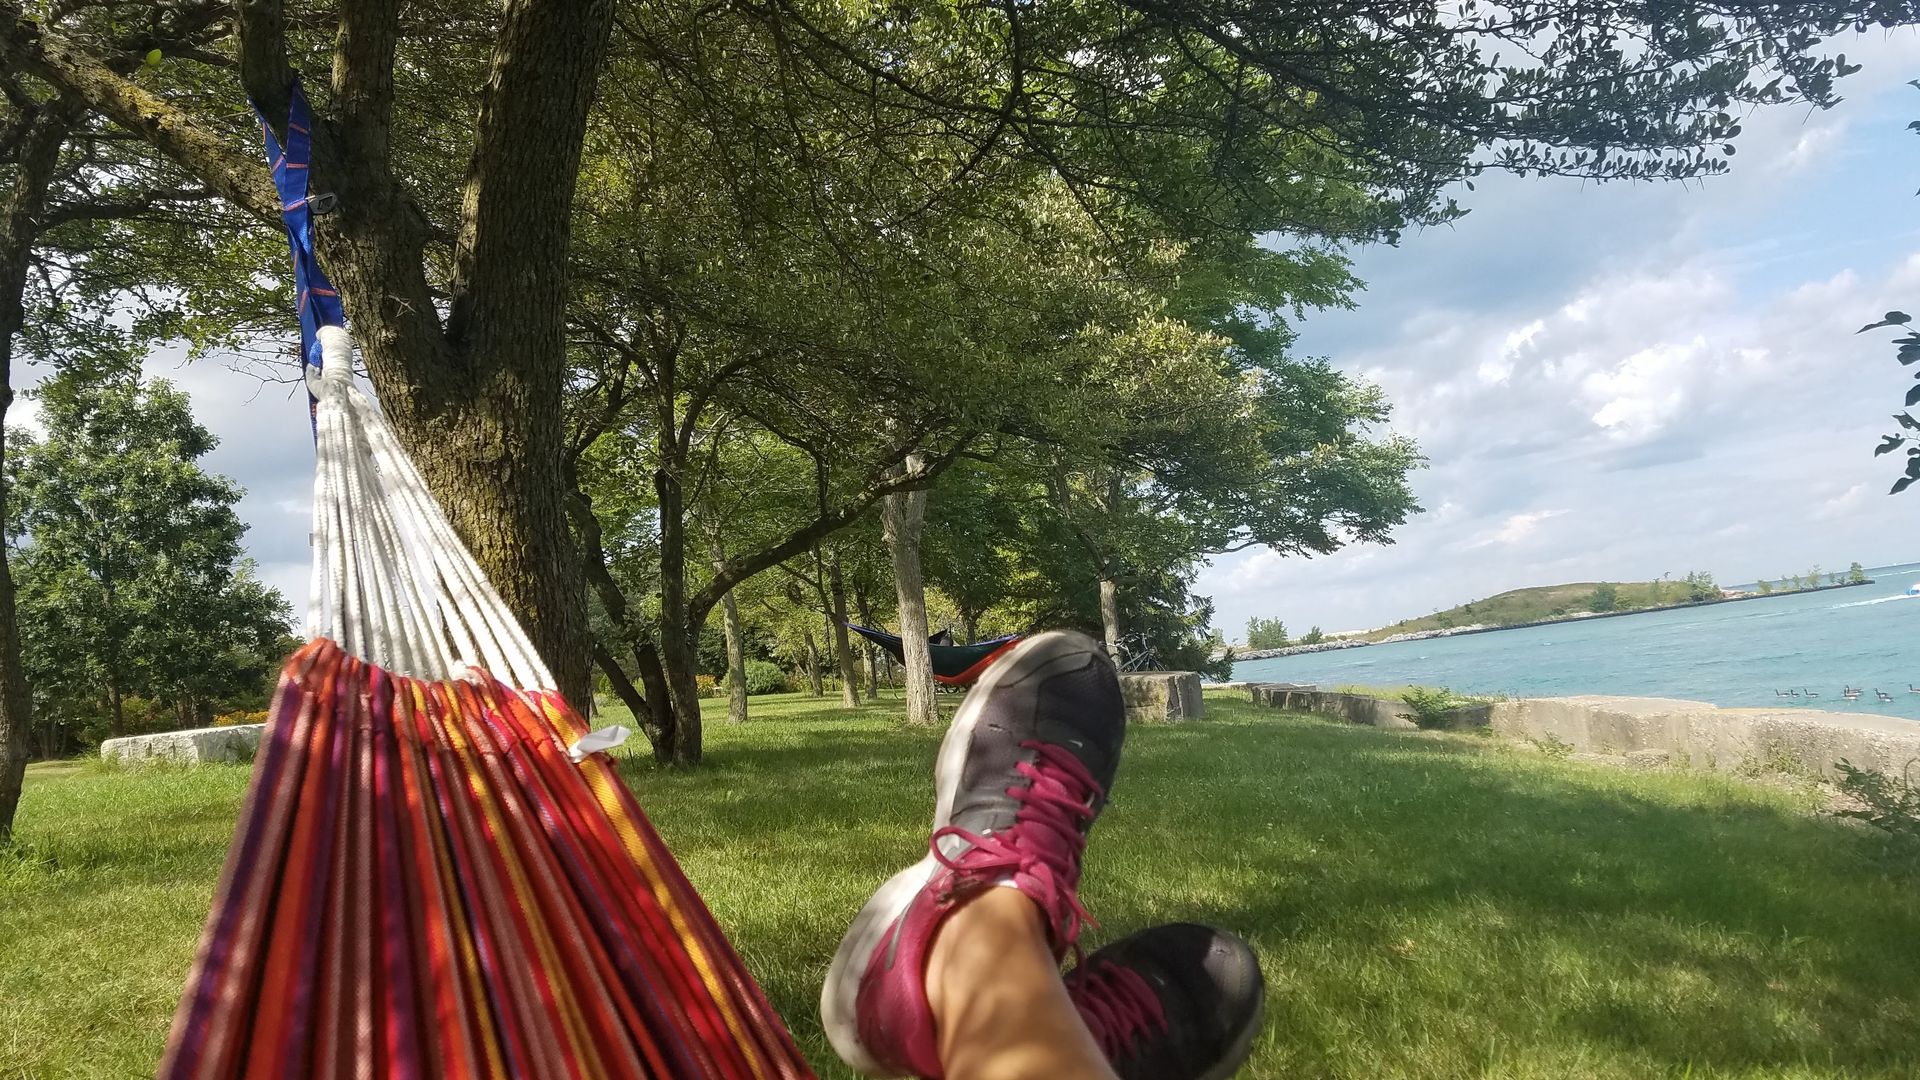 Feet up on a hammock